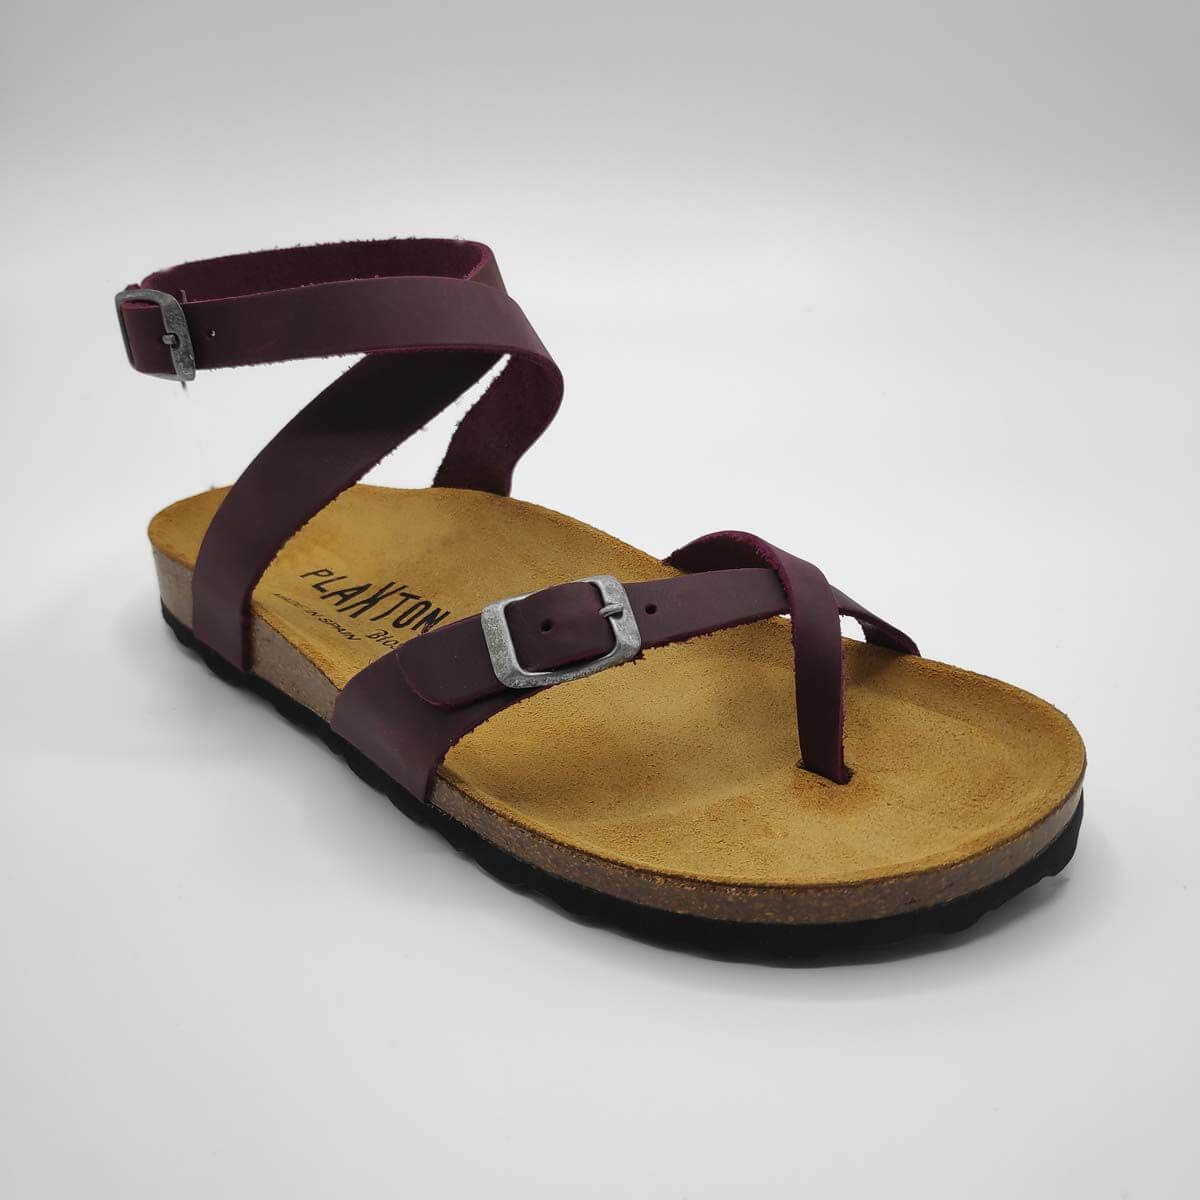 Sandals Lace up - Sandals | Pagonis Sandals